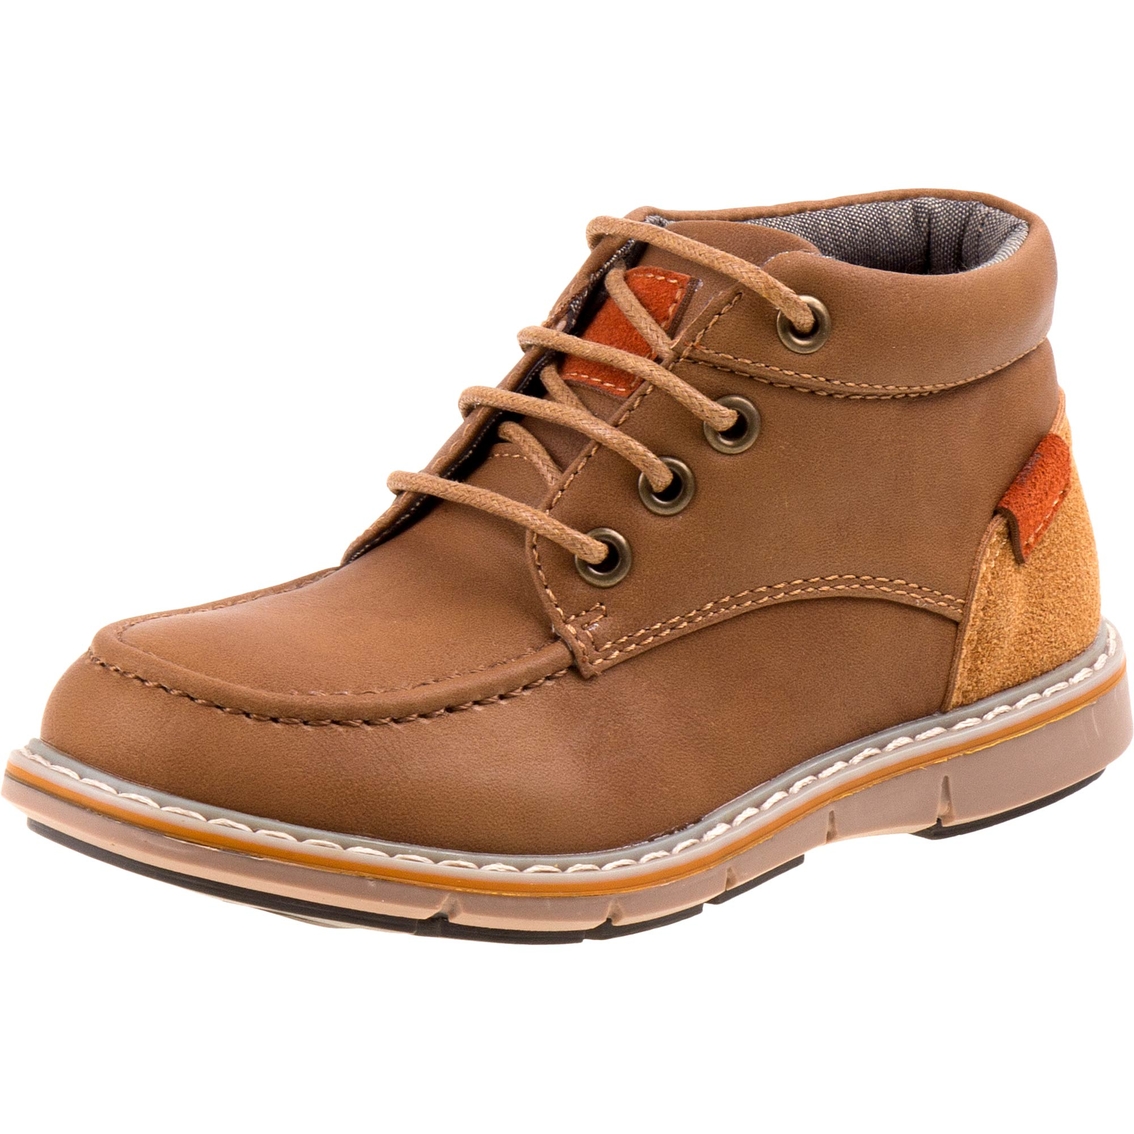 Joseph Allen Boys Casual Boots | Boots 